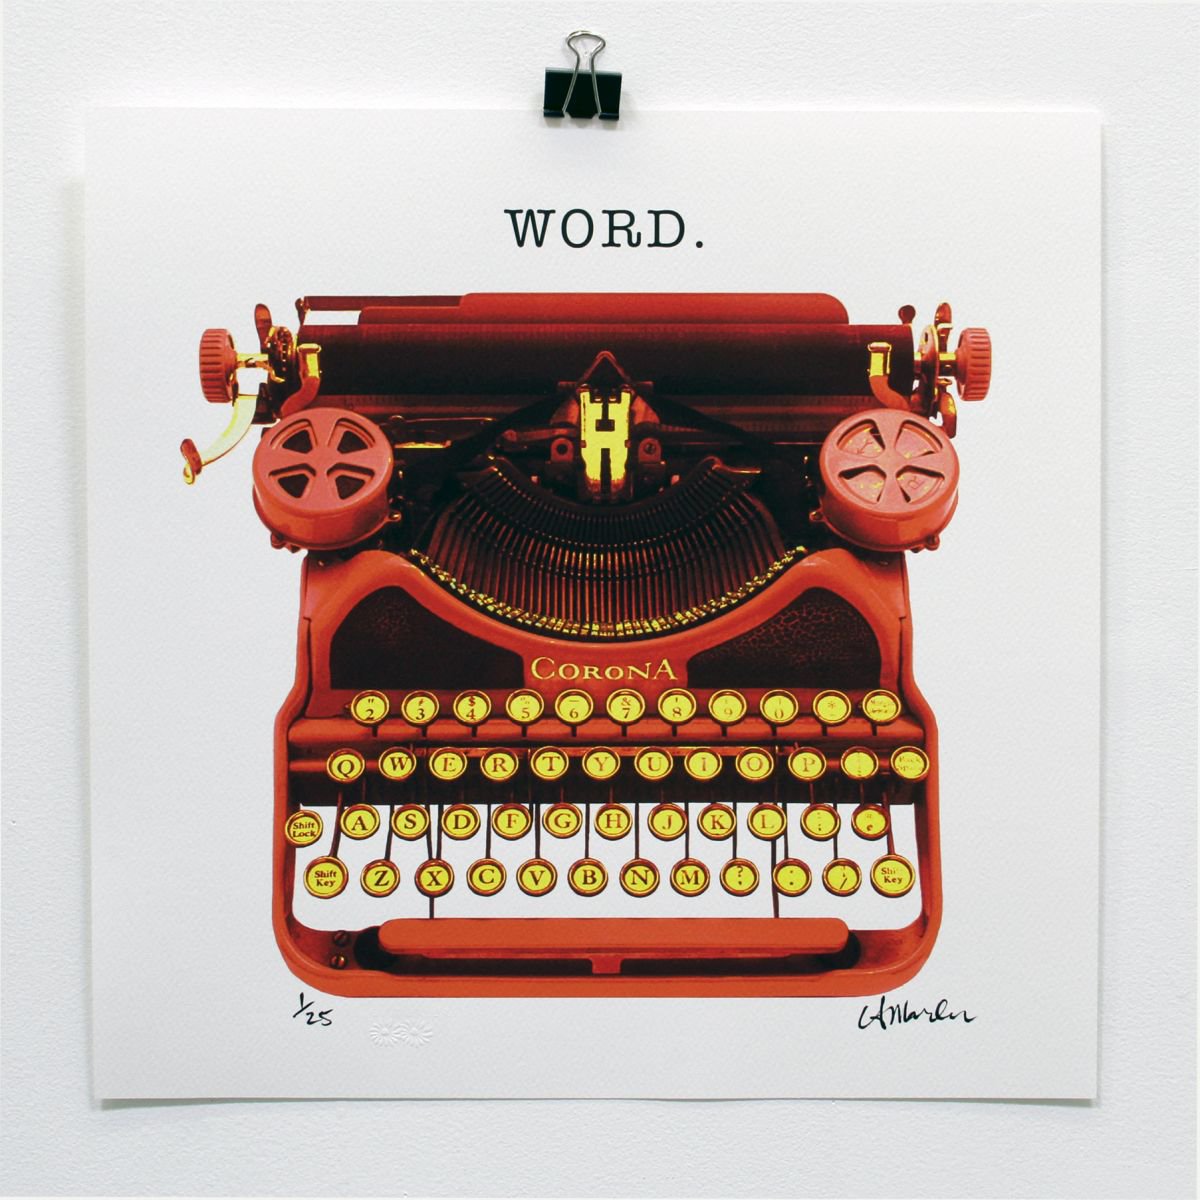 Word. - TypOwriter art by LA Marler by LA Marler